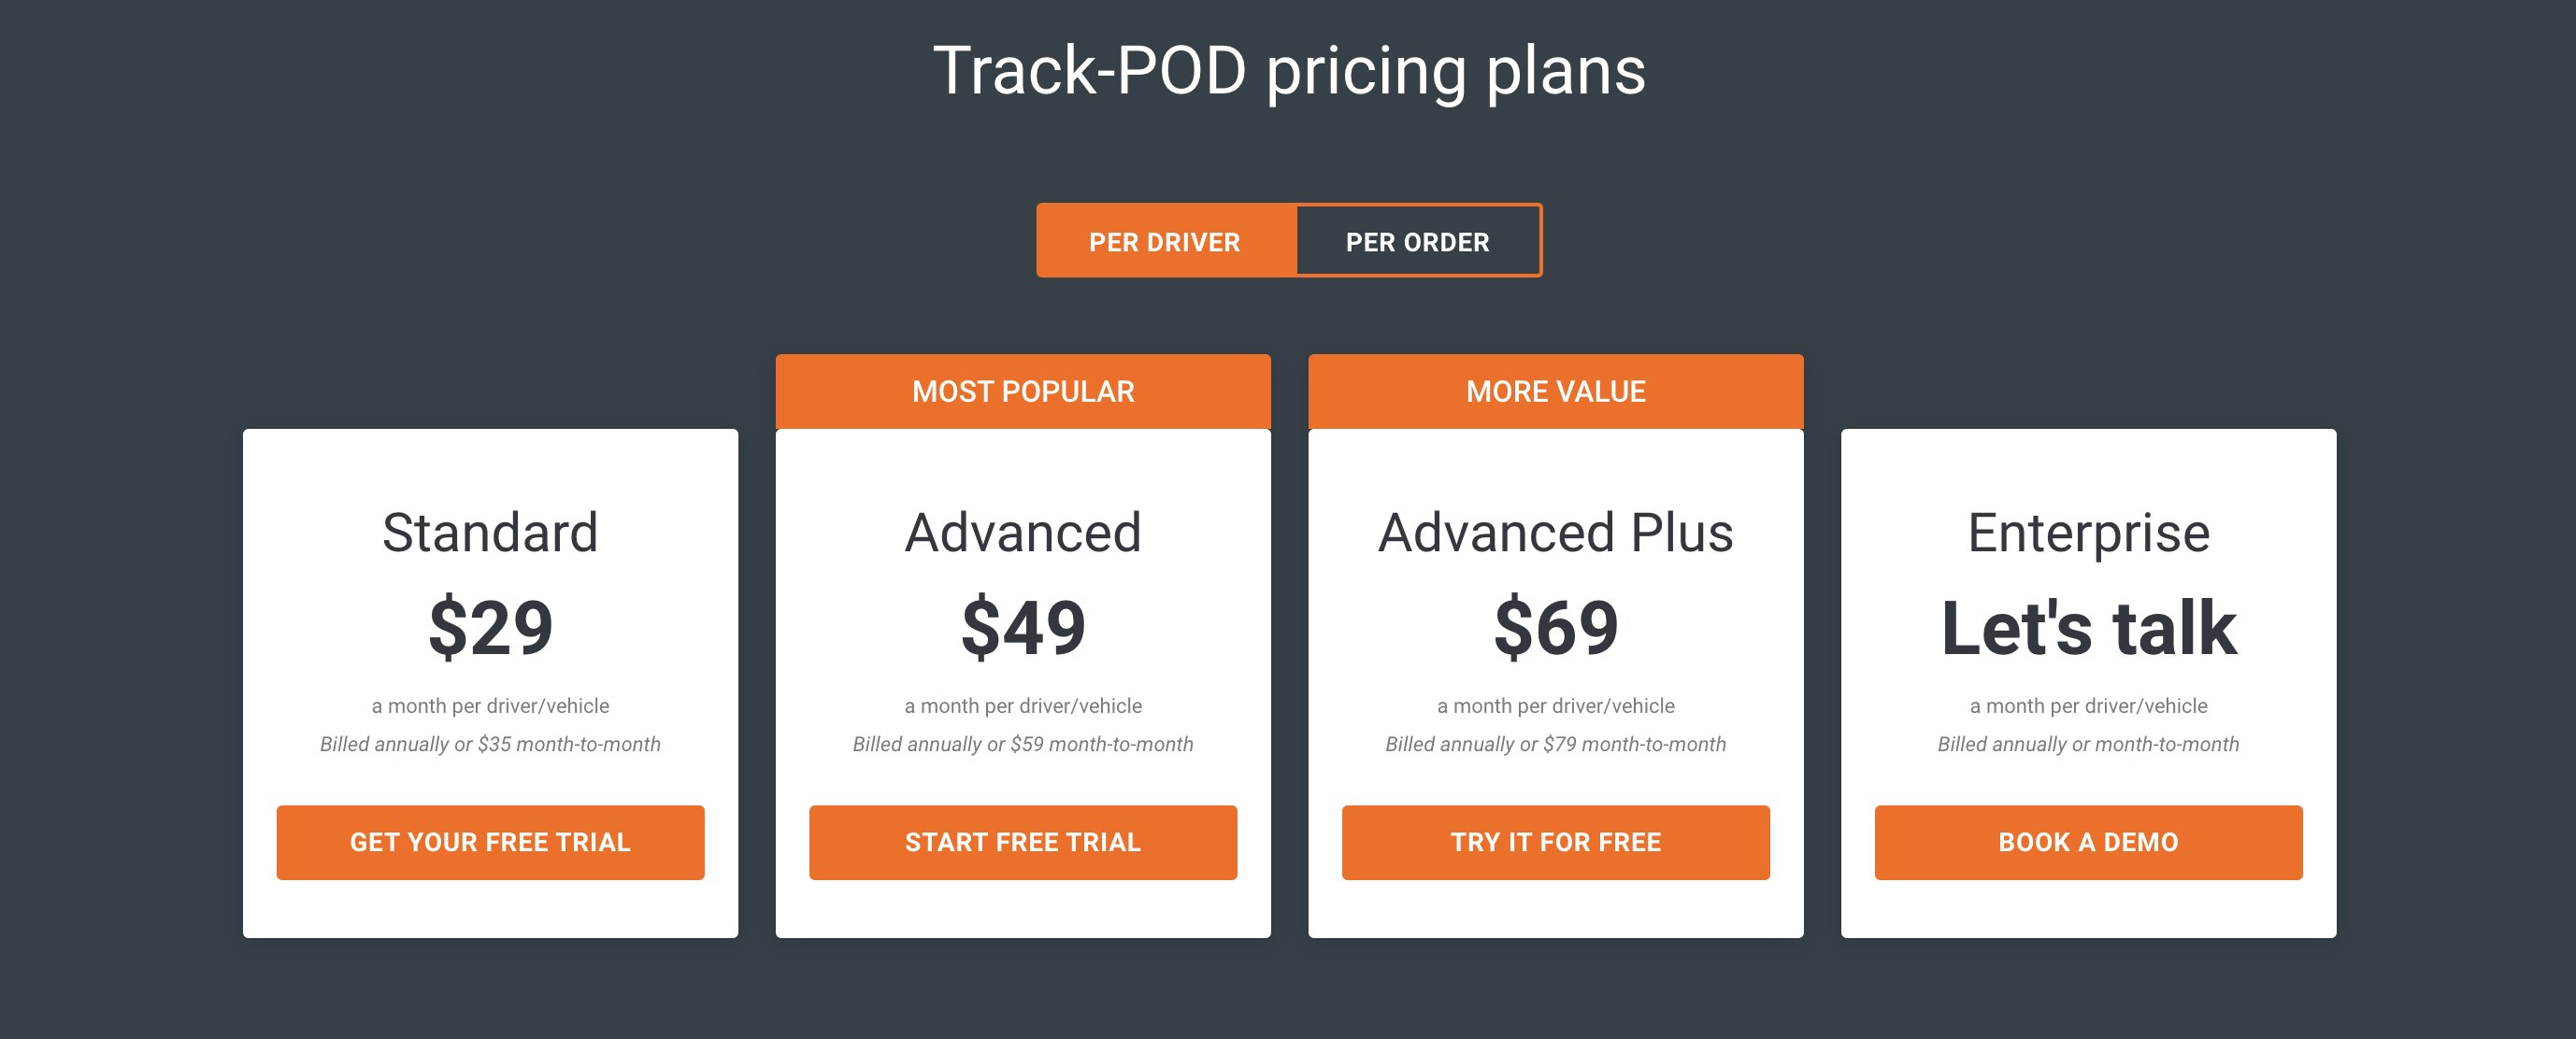 Track-POD pricing